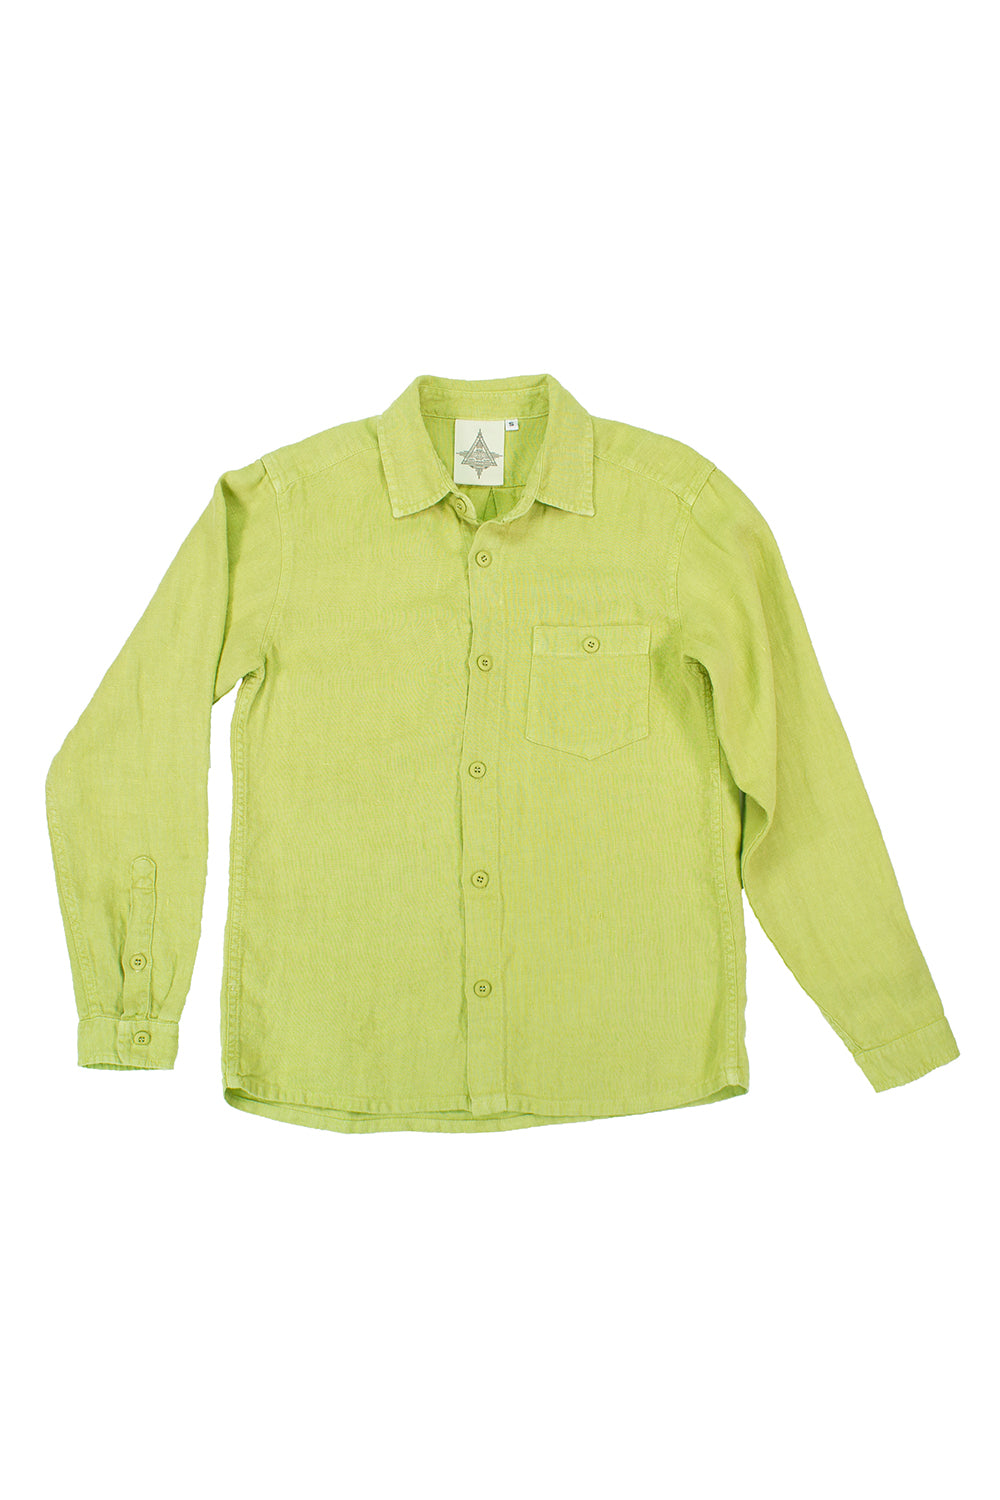 Lassen 100% Hemp Shirt | Jungmaven Hemp Clothing & Accessories / Color: Margarita